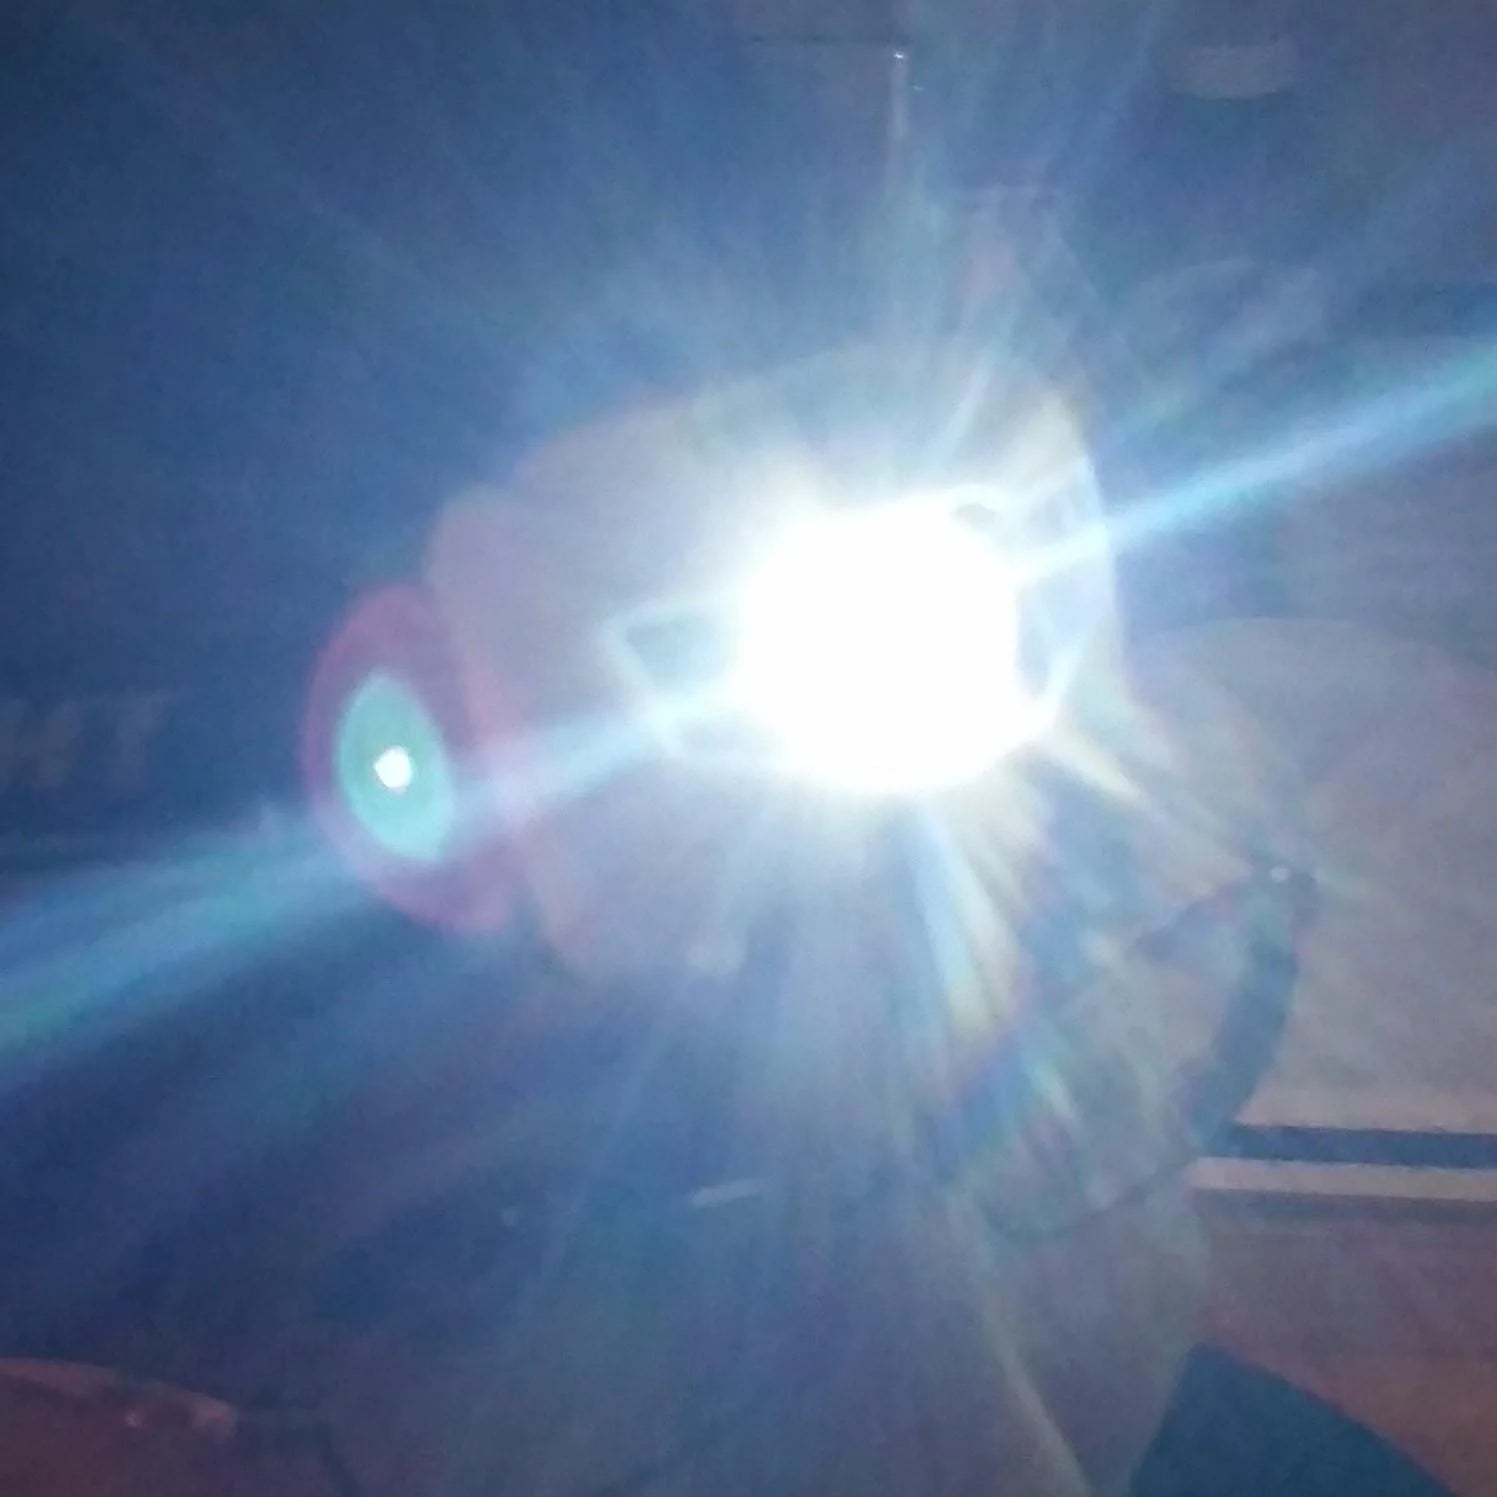 2-Pack Cree LED Headlamp